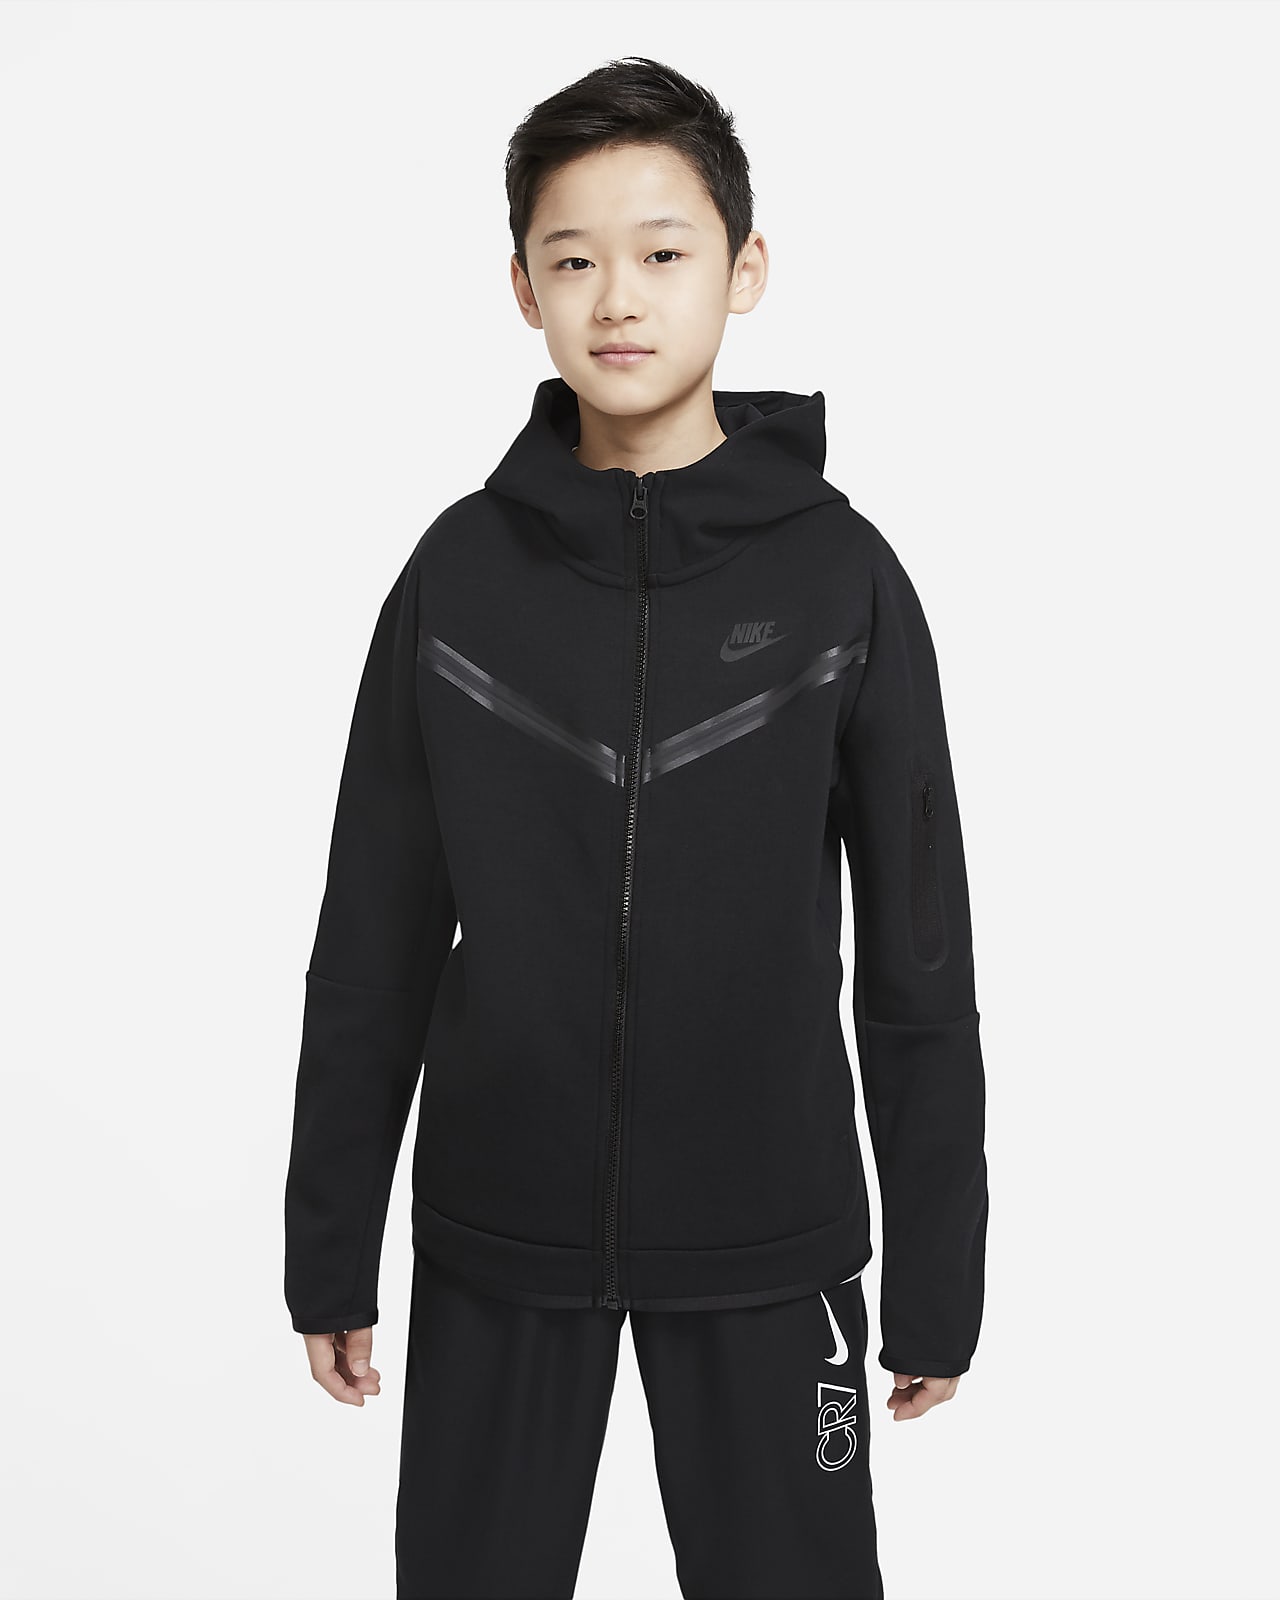 Nike Sportswear Tech Fleece Sudadera con capucha con cremallera completa - Niño